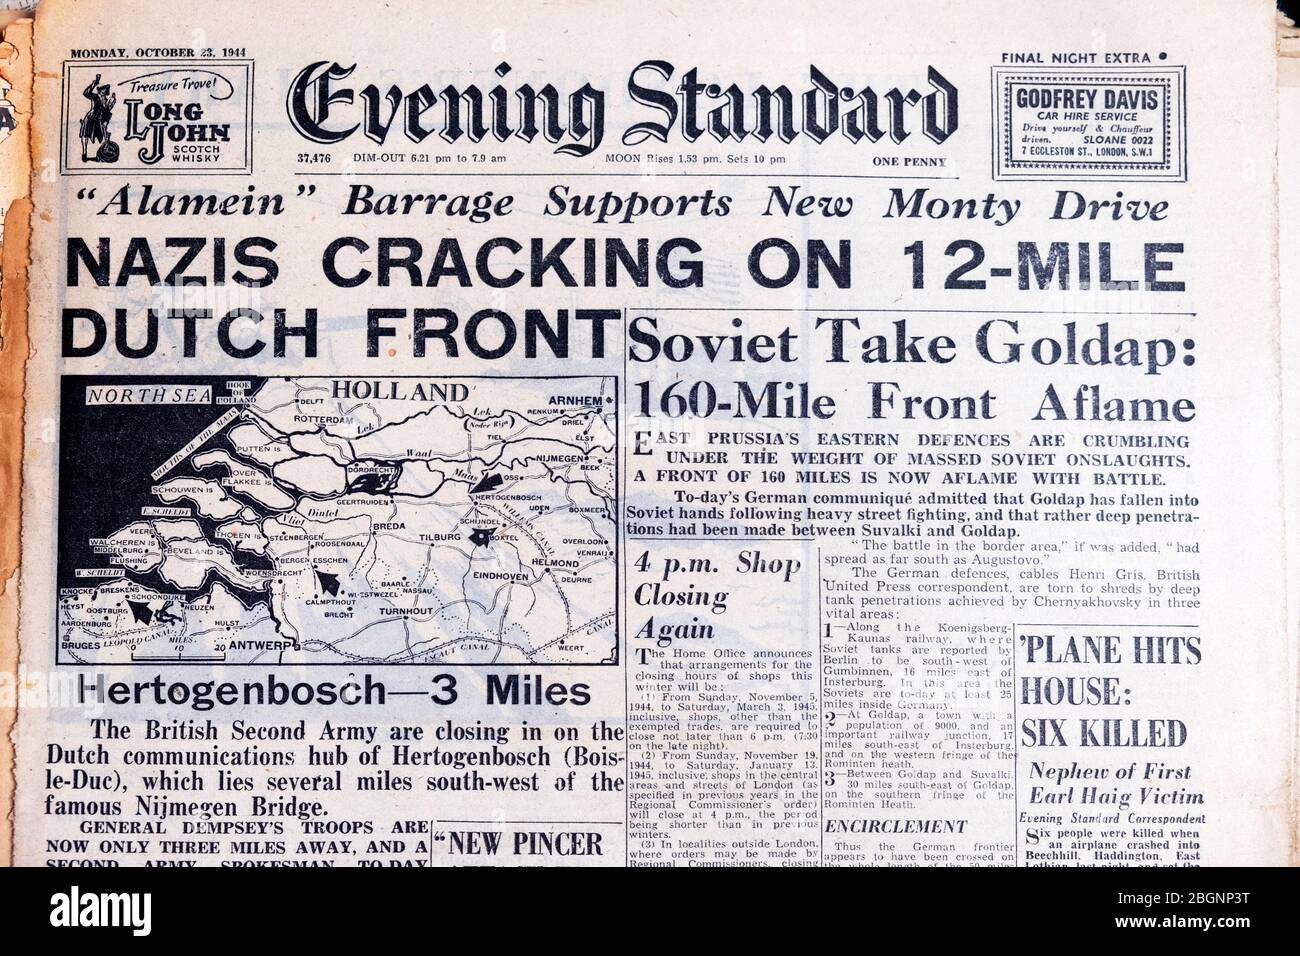 'Nazis Cracking on 12-Mile Durch Front' 'Soviet Take Goldap: 160-Mile Front Aflame 'Evening Standard 1940s British newspaper headline 23 October 1944 Stock Photo